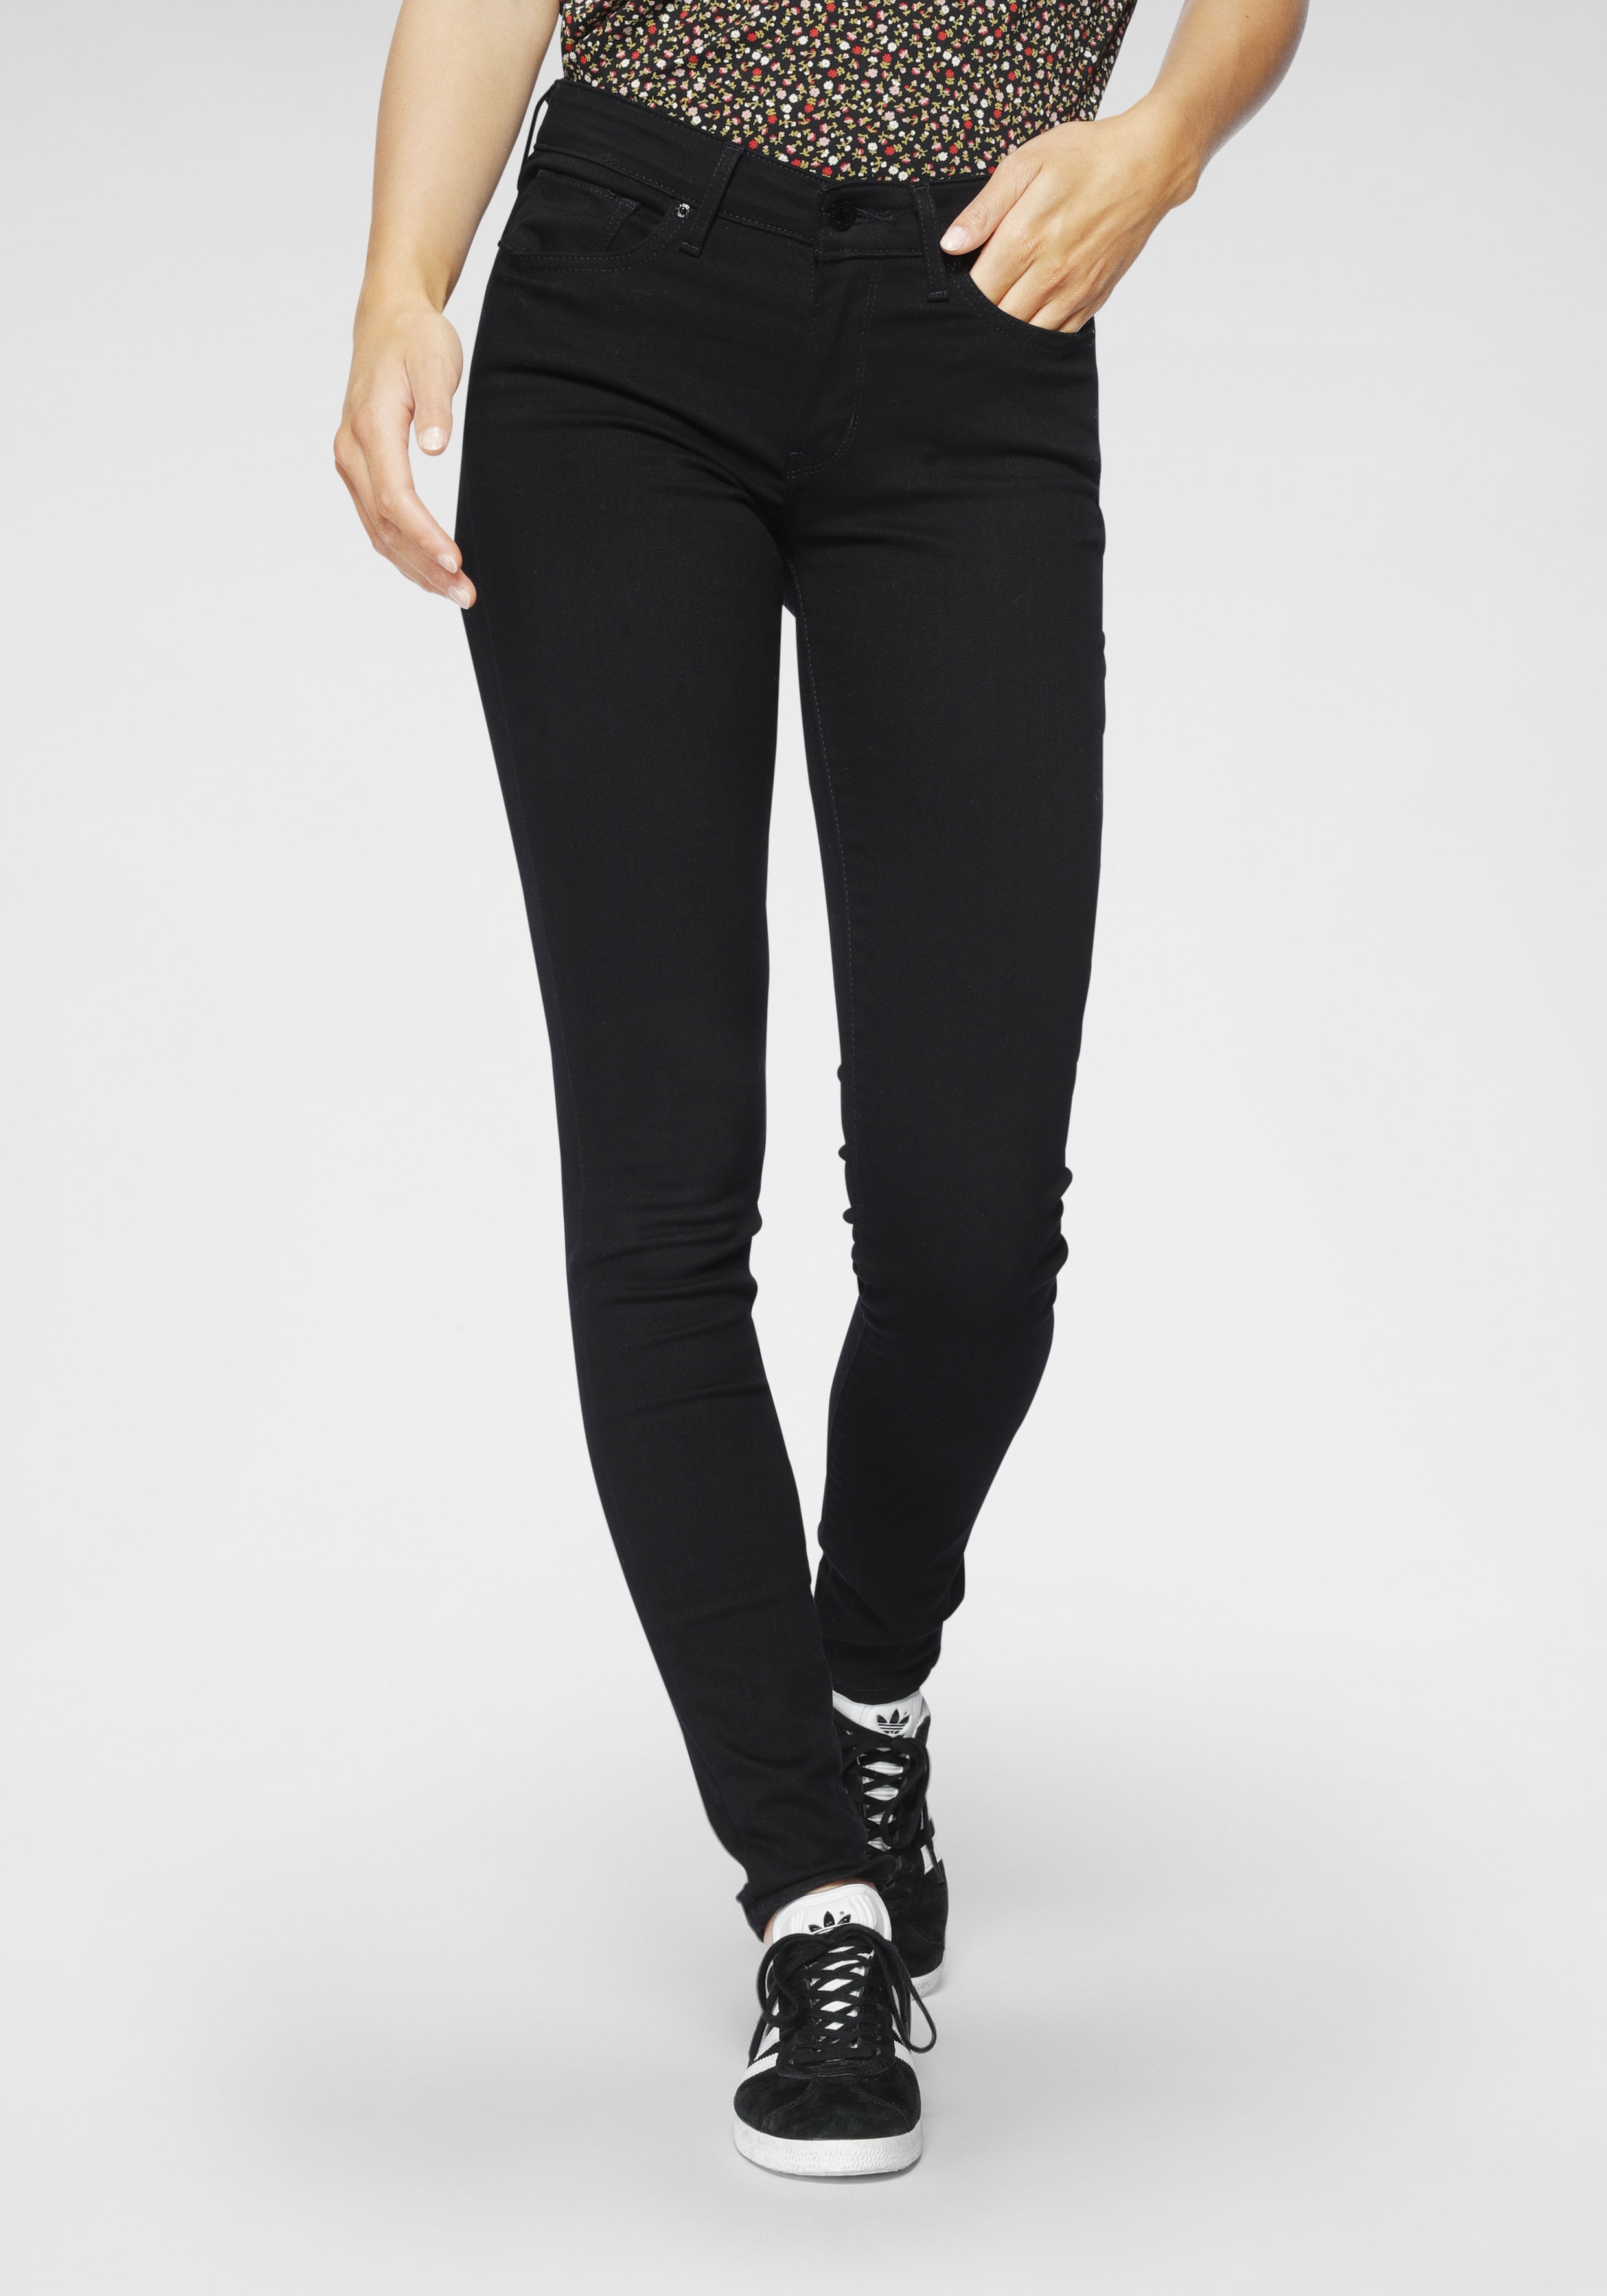 Skinny-fit-Jeans LEVI'S "711 Skinny" Gr. 32, Länge 28, schwarz (black) Damen Jeans Röhrenjeans